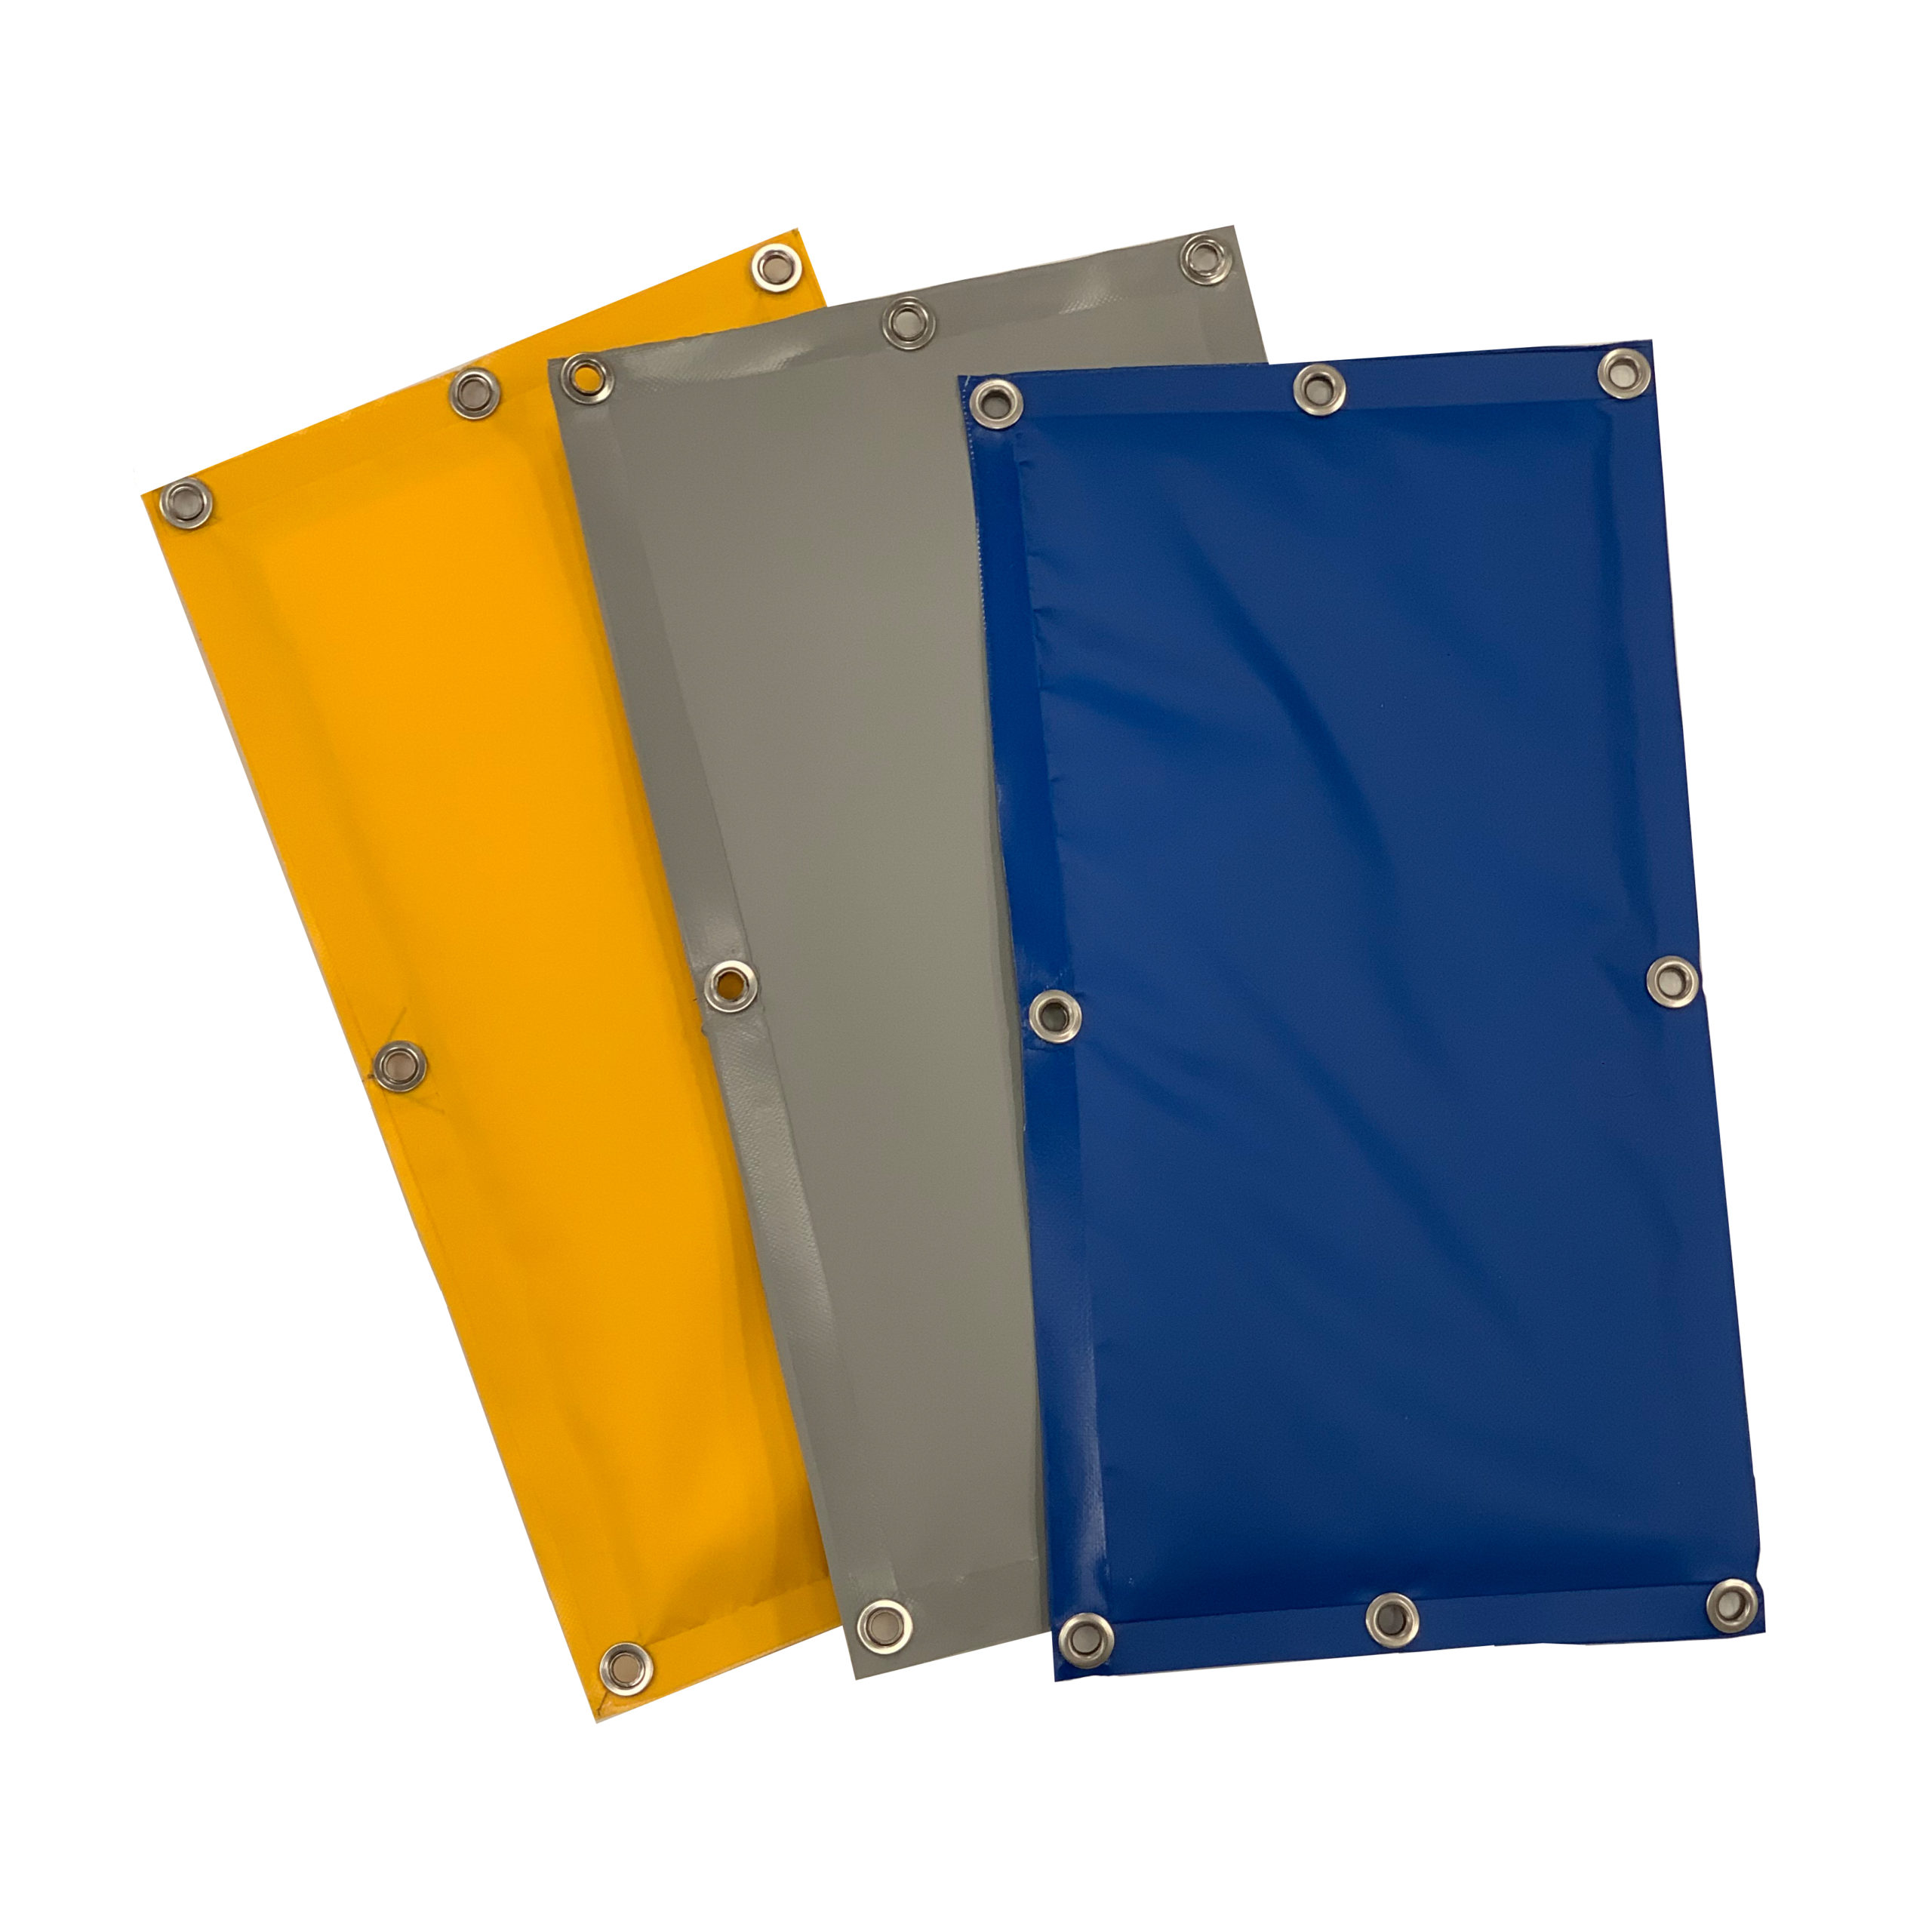 Lead Radiation Shielding Blankets, Racks, & More - Lancs Industries